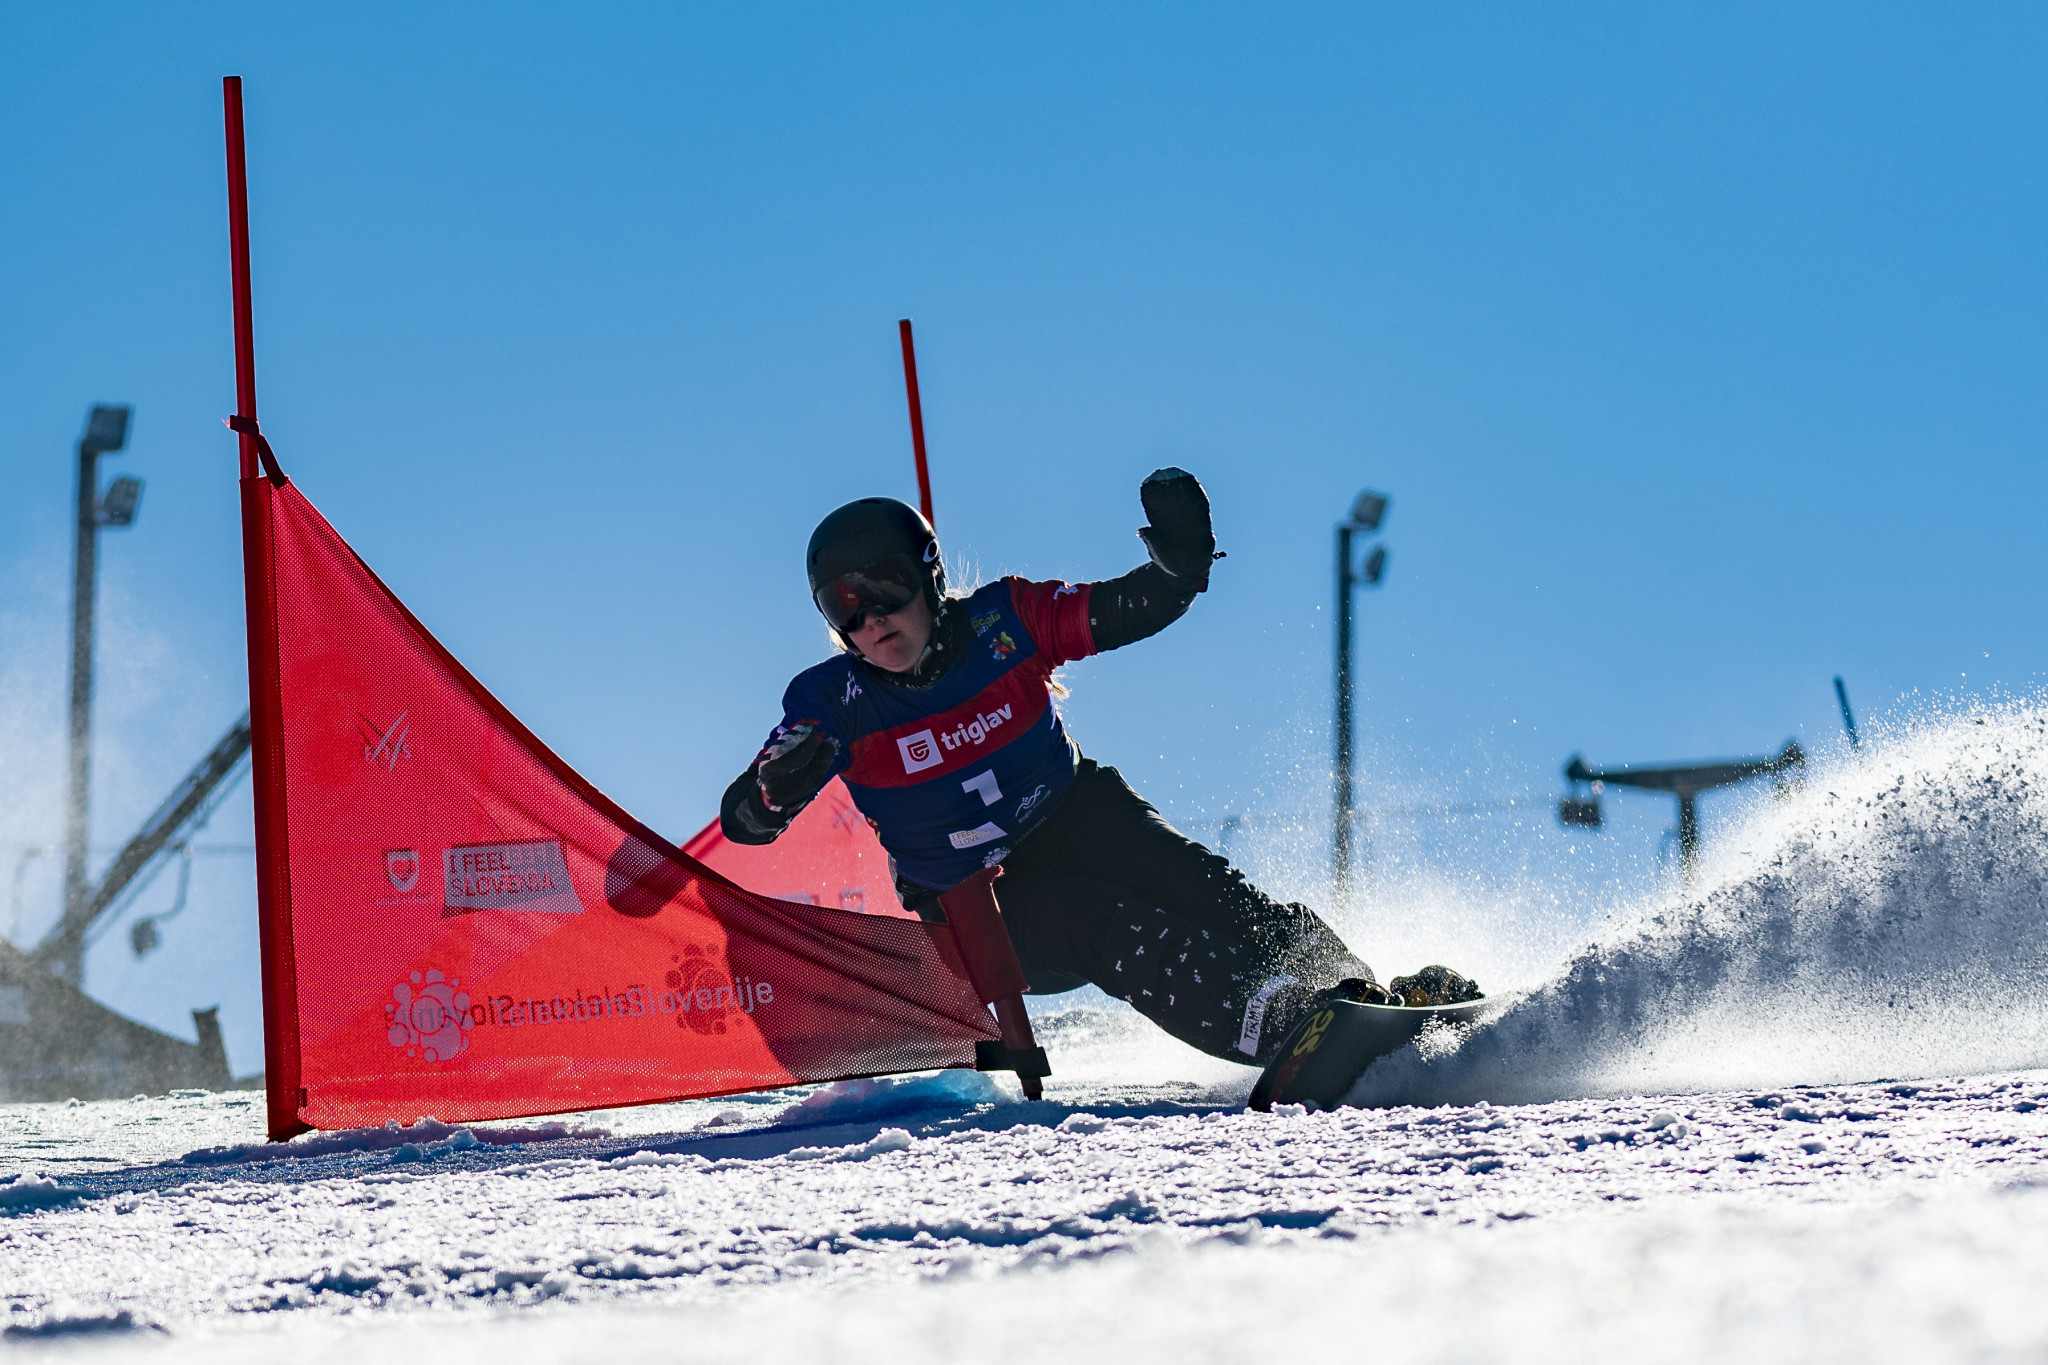 Sofia Nadyrshina was already the senior world champion in women's parallel slalom snowboarding ©Getty Images